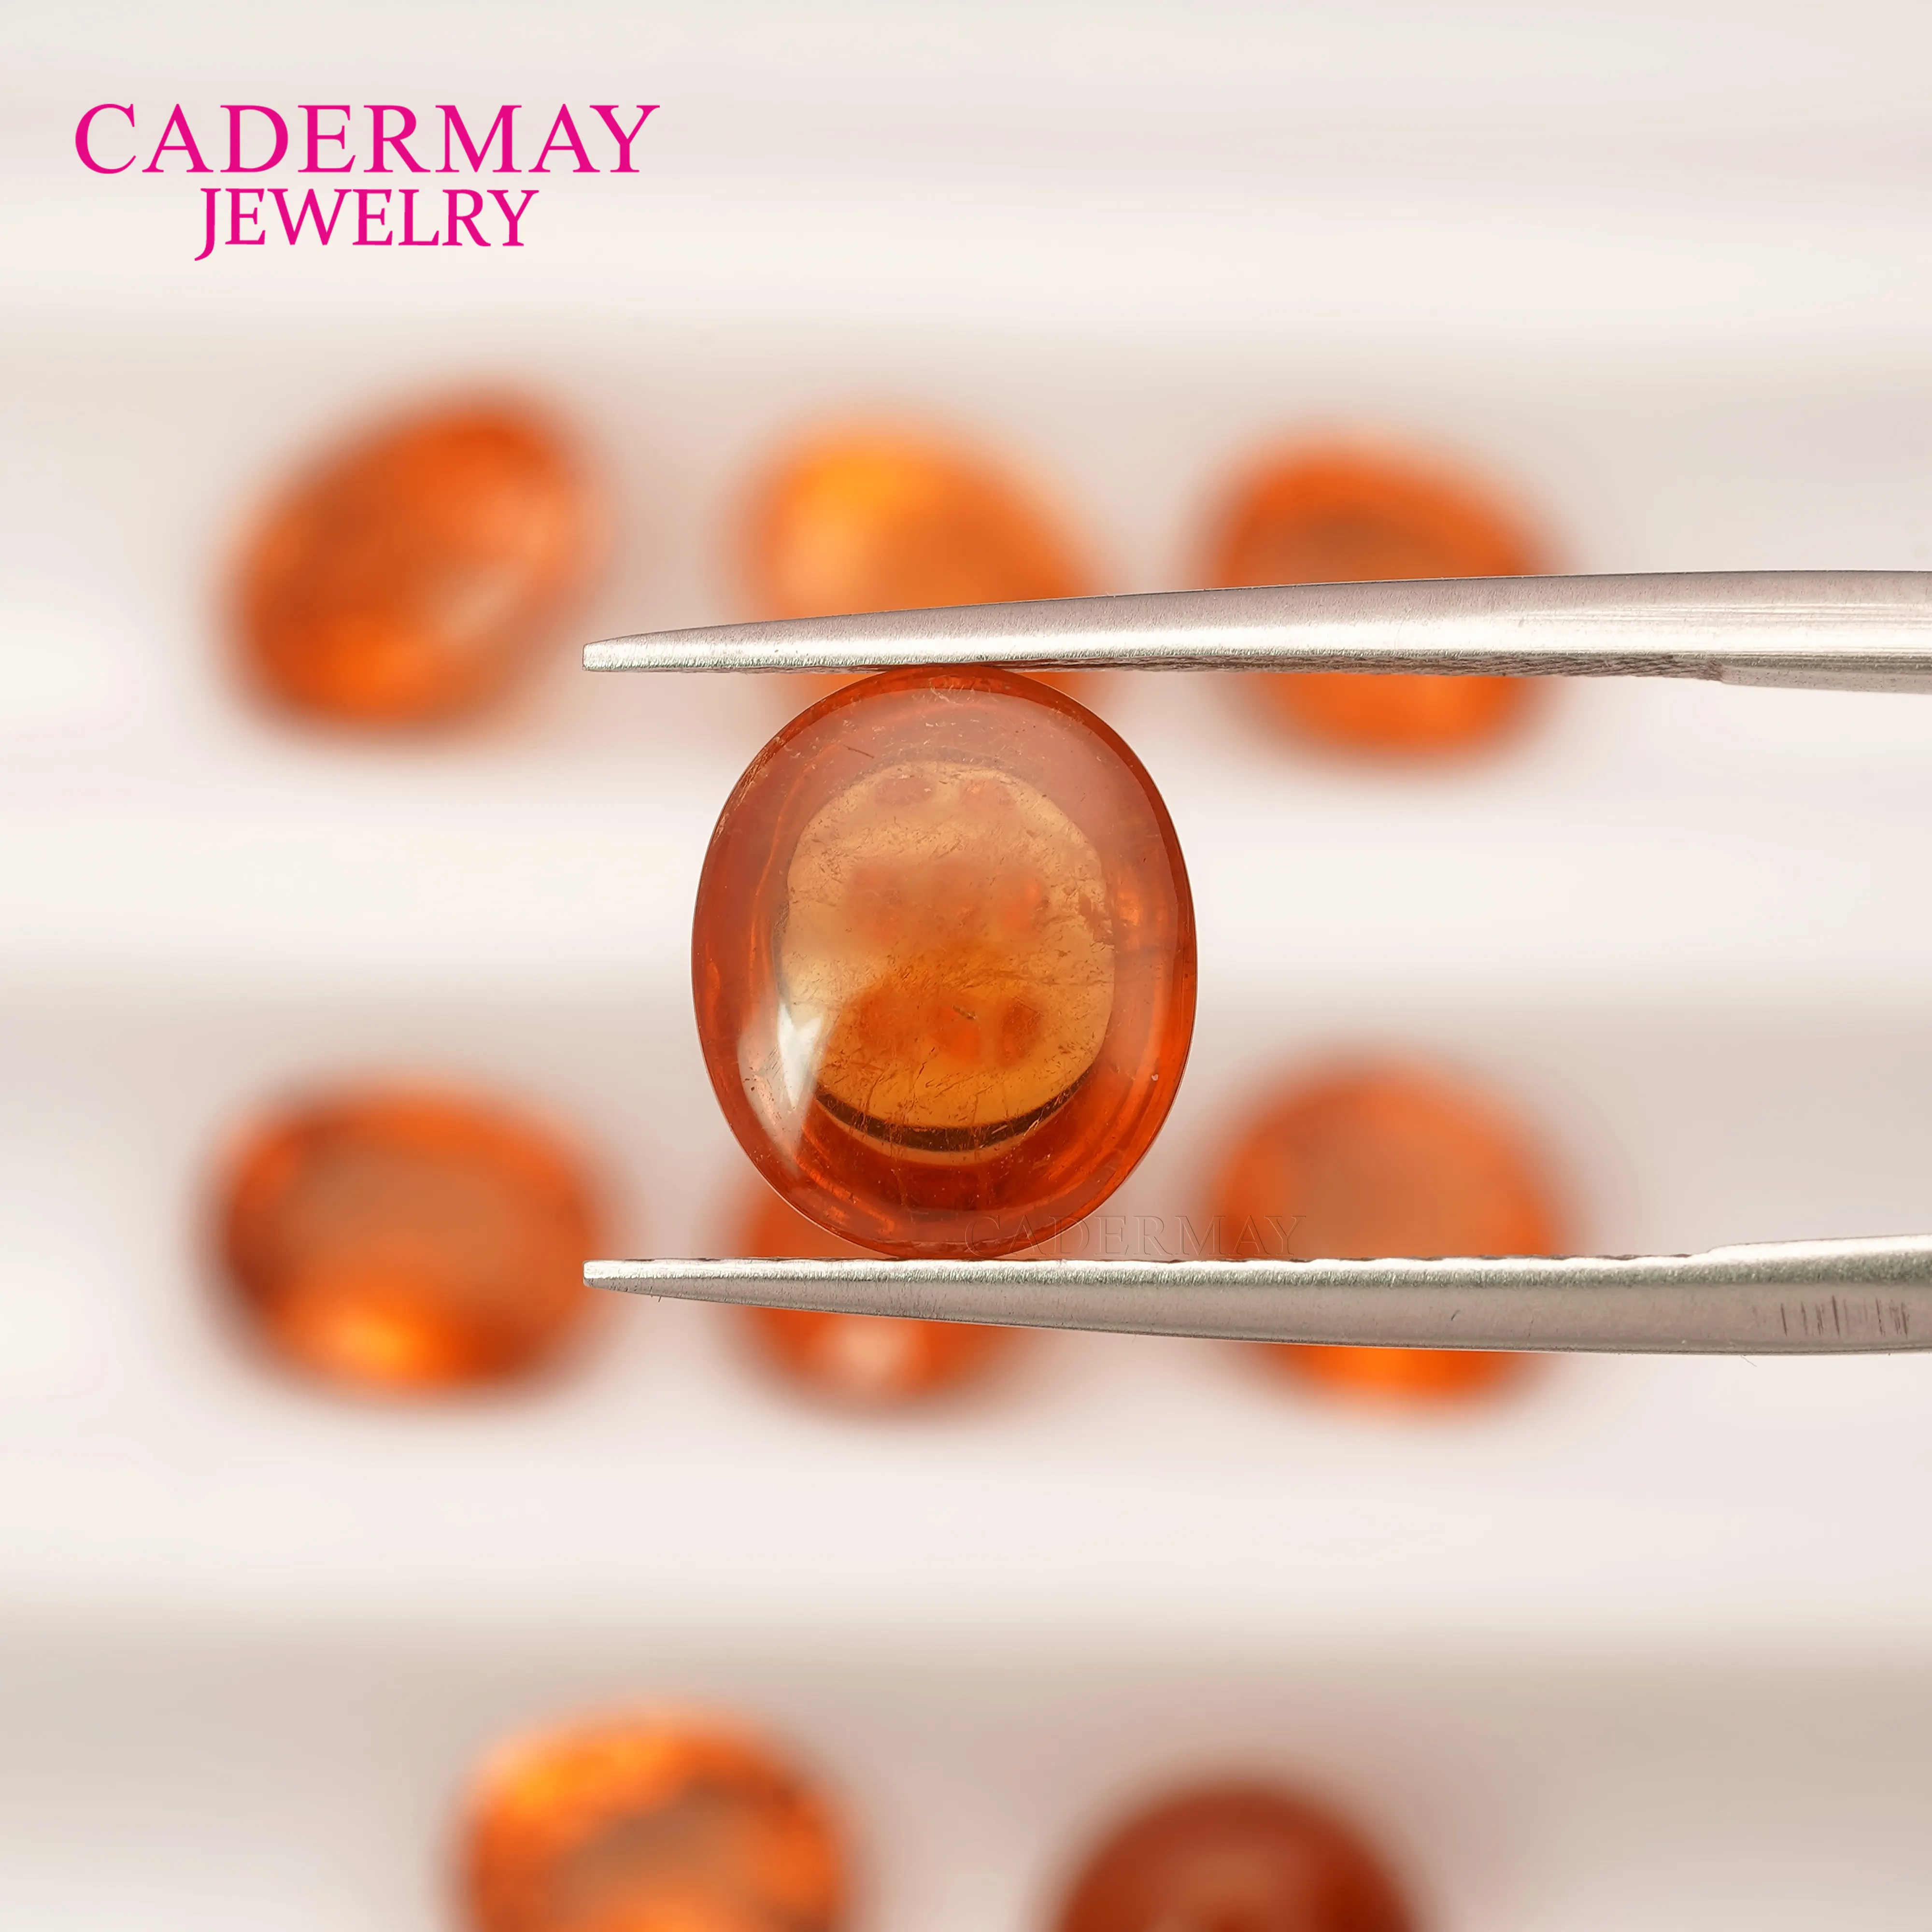 Cadermay อัญมณีธรรมชาติที่ไม่ซ้ําใคร 2ct-3ct รูปไข่สีส้มสดใส Cabochon โกเมนธรรมชาติอัญมณีสเปสซาร์ไทต์ธรรมชาติในสต็อก